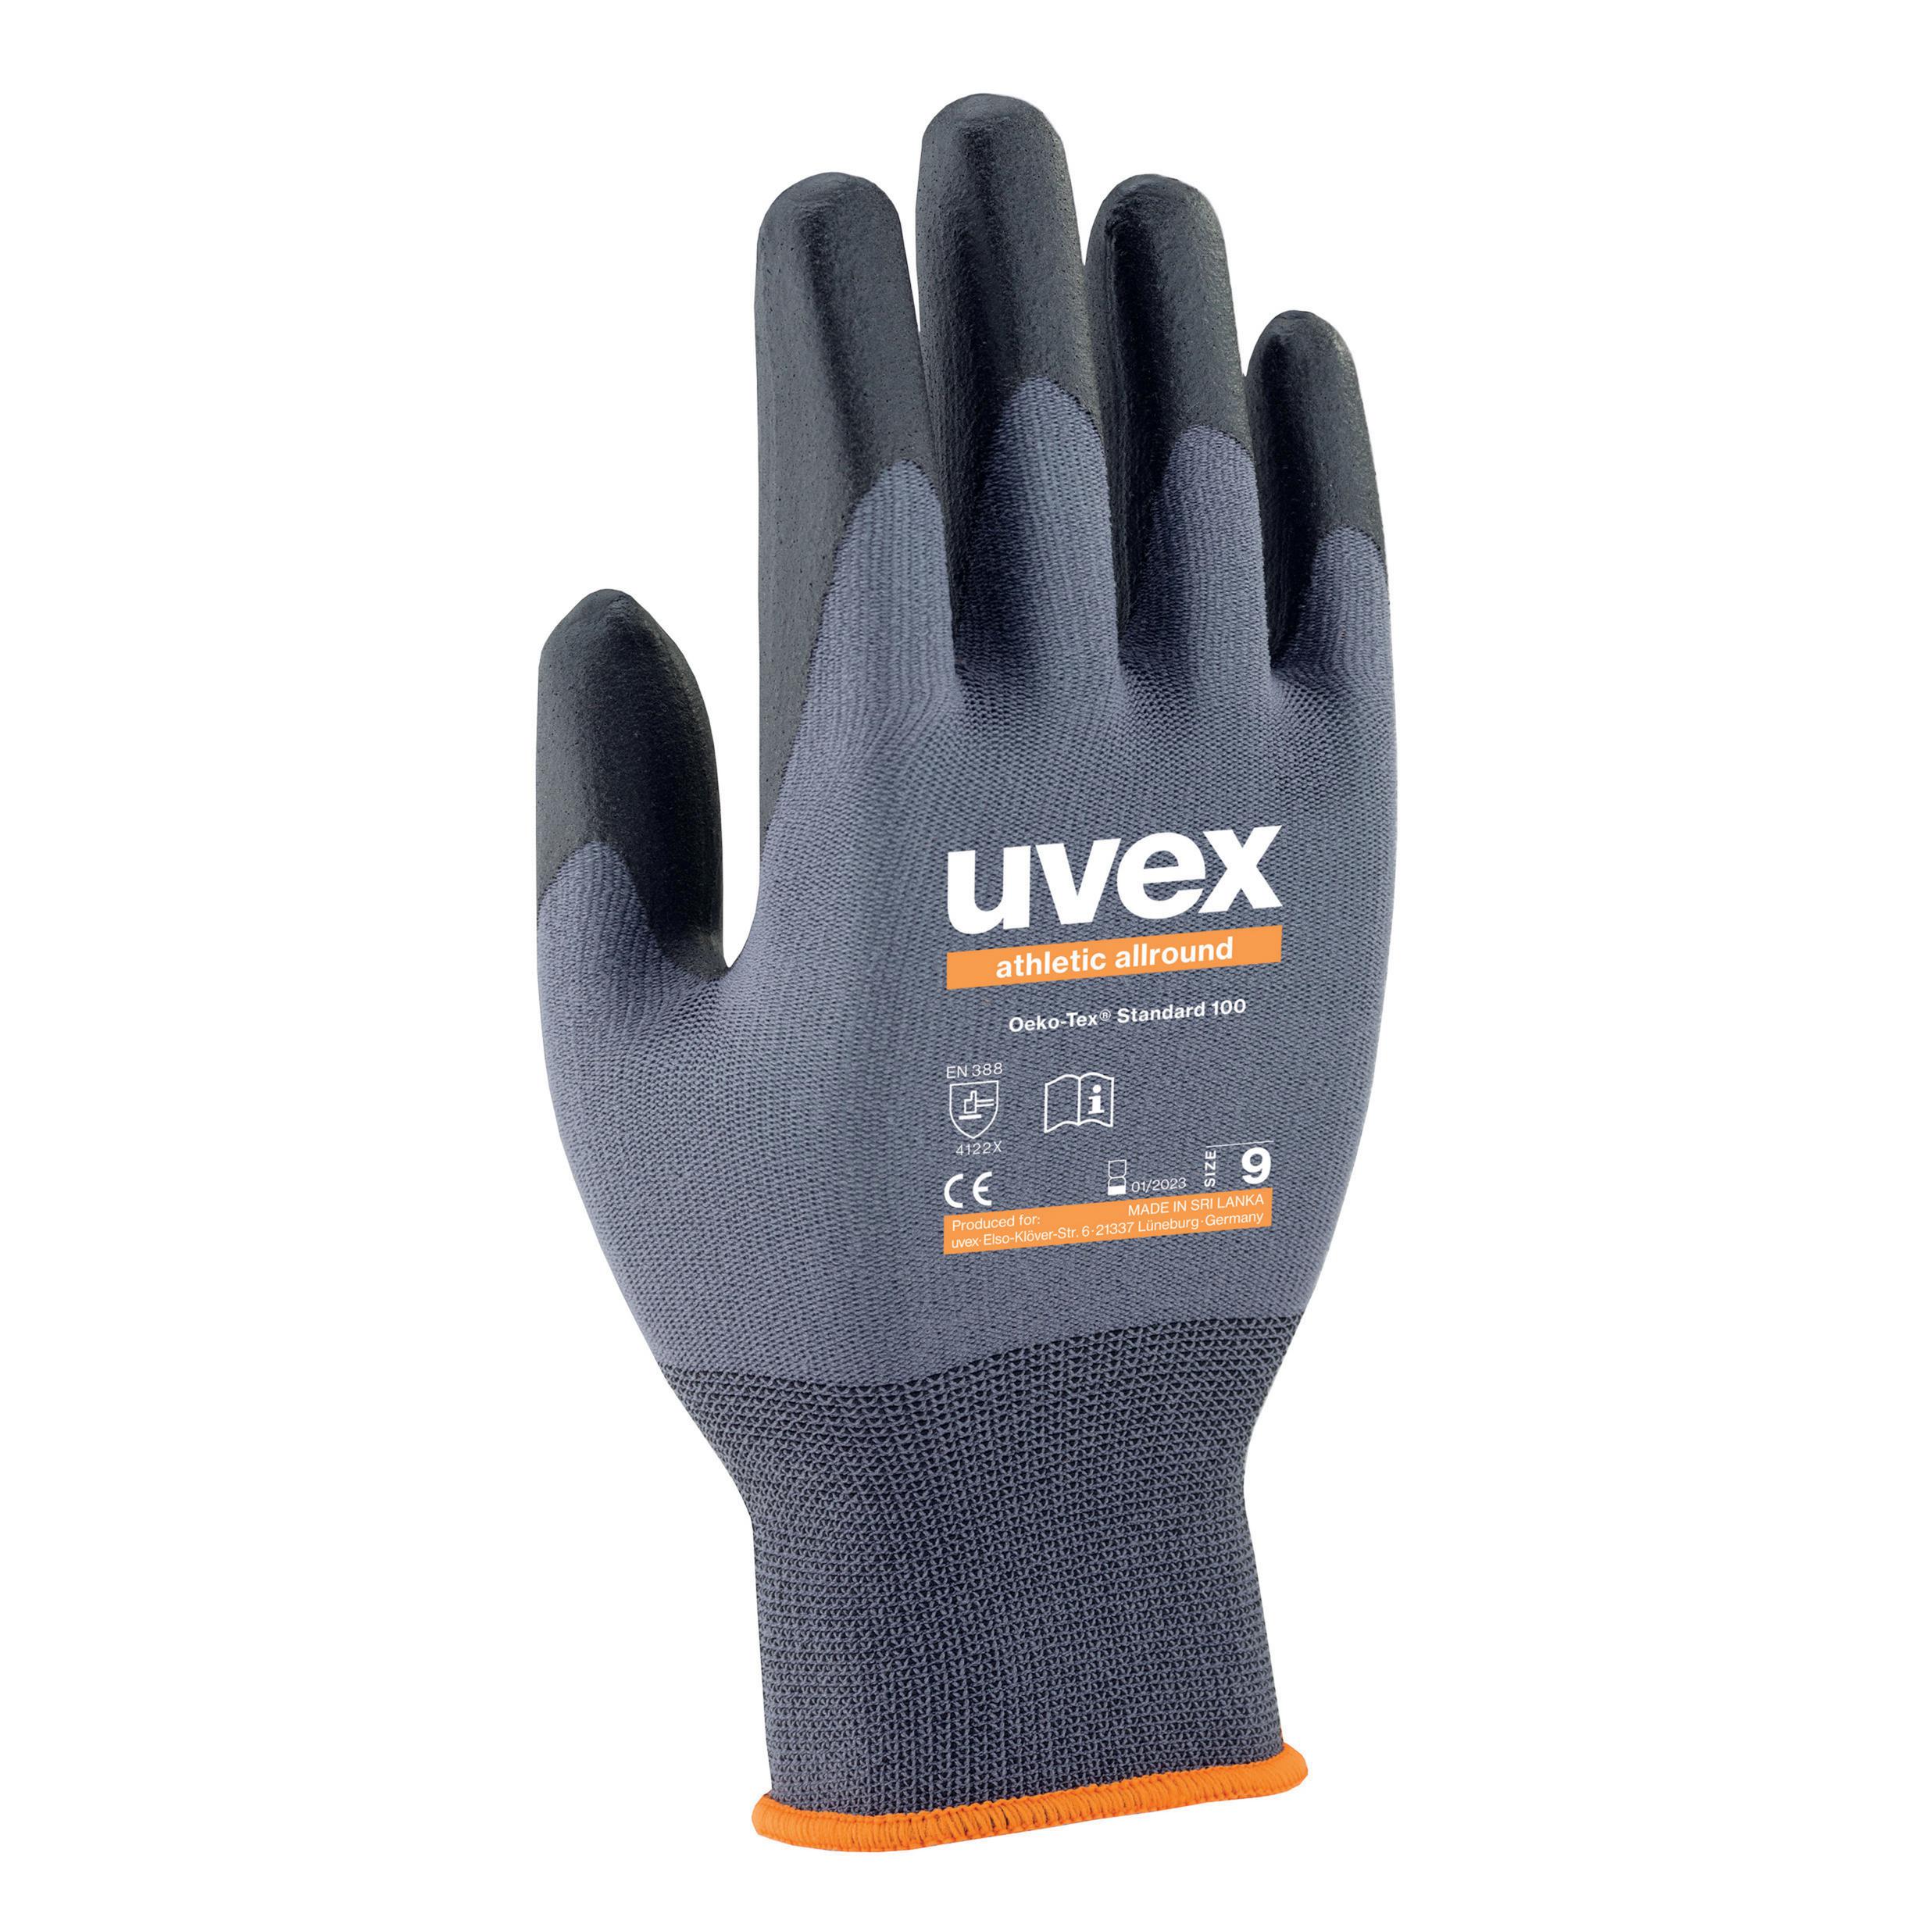 uvex athletic allround Safey Gloves - Large